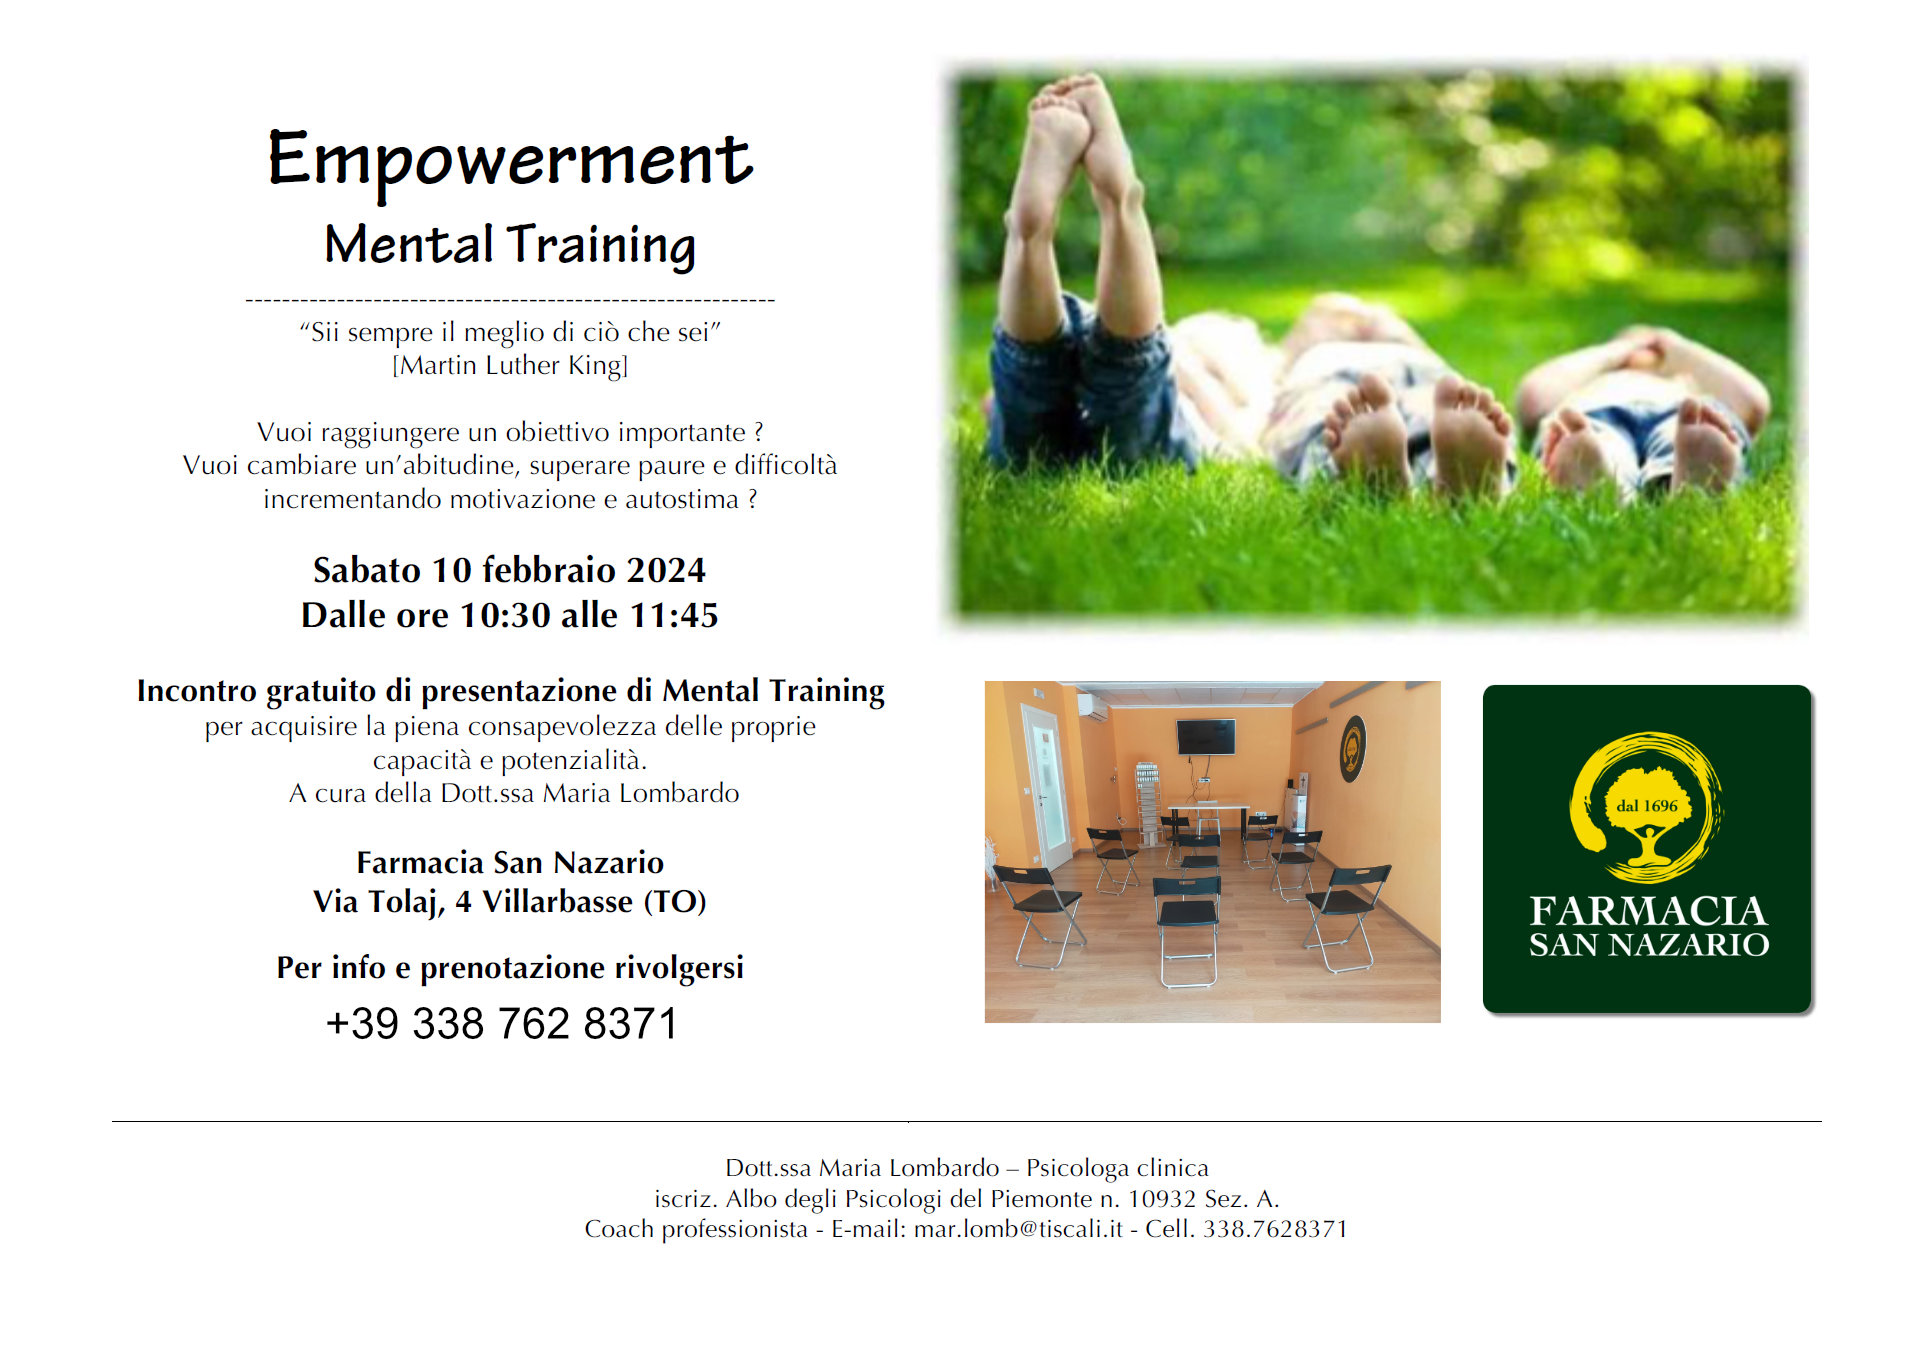 Empowerment Mental Training 10 2 24